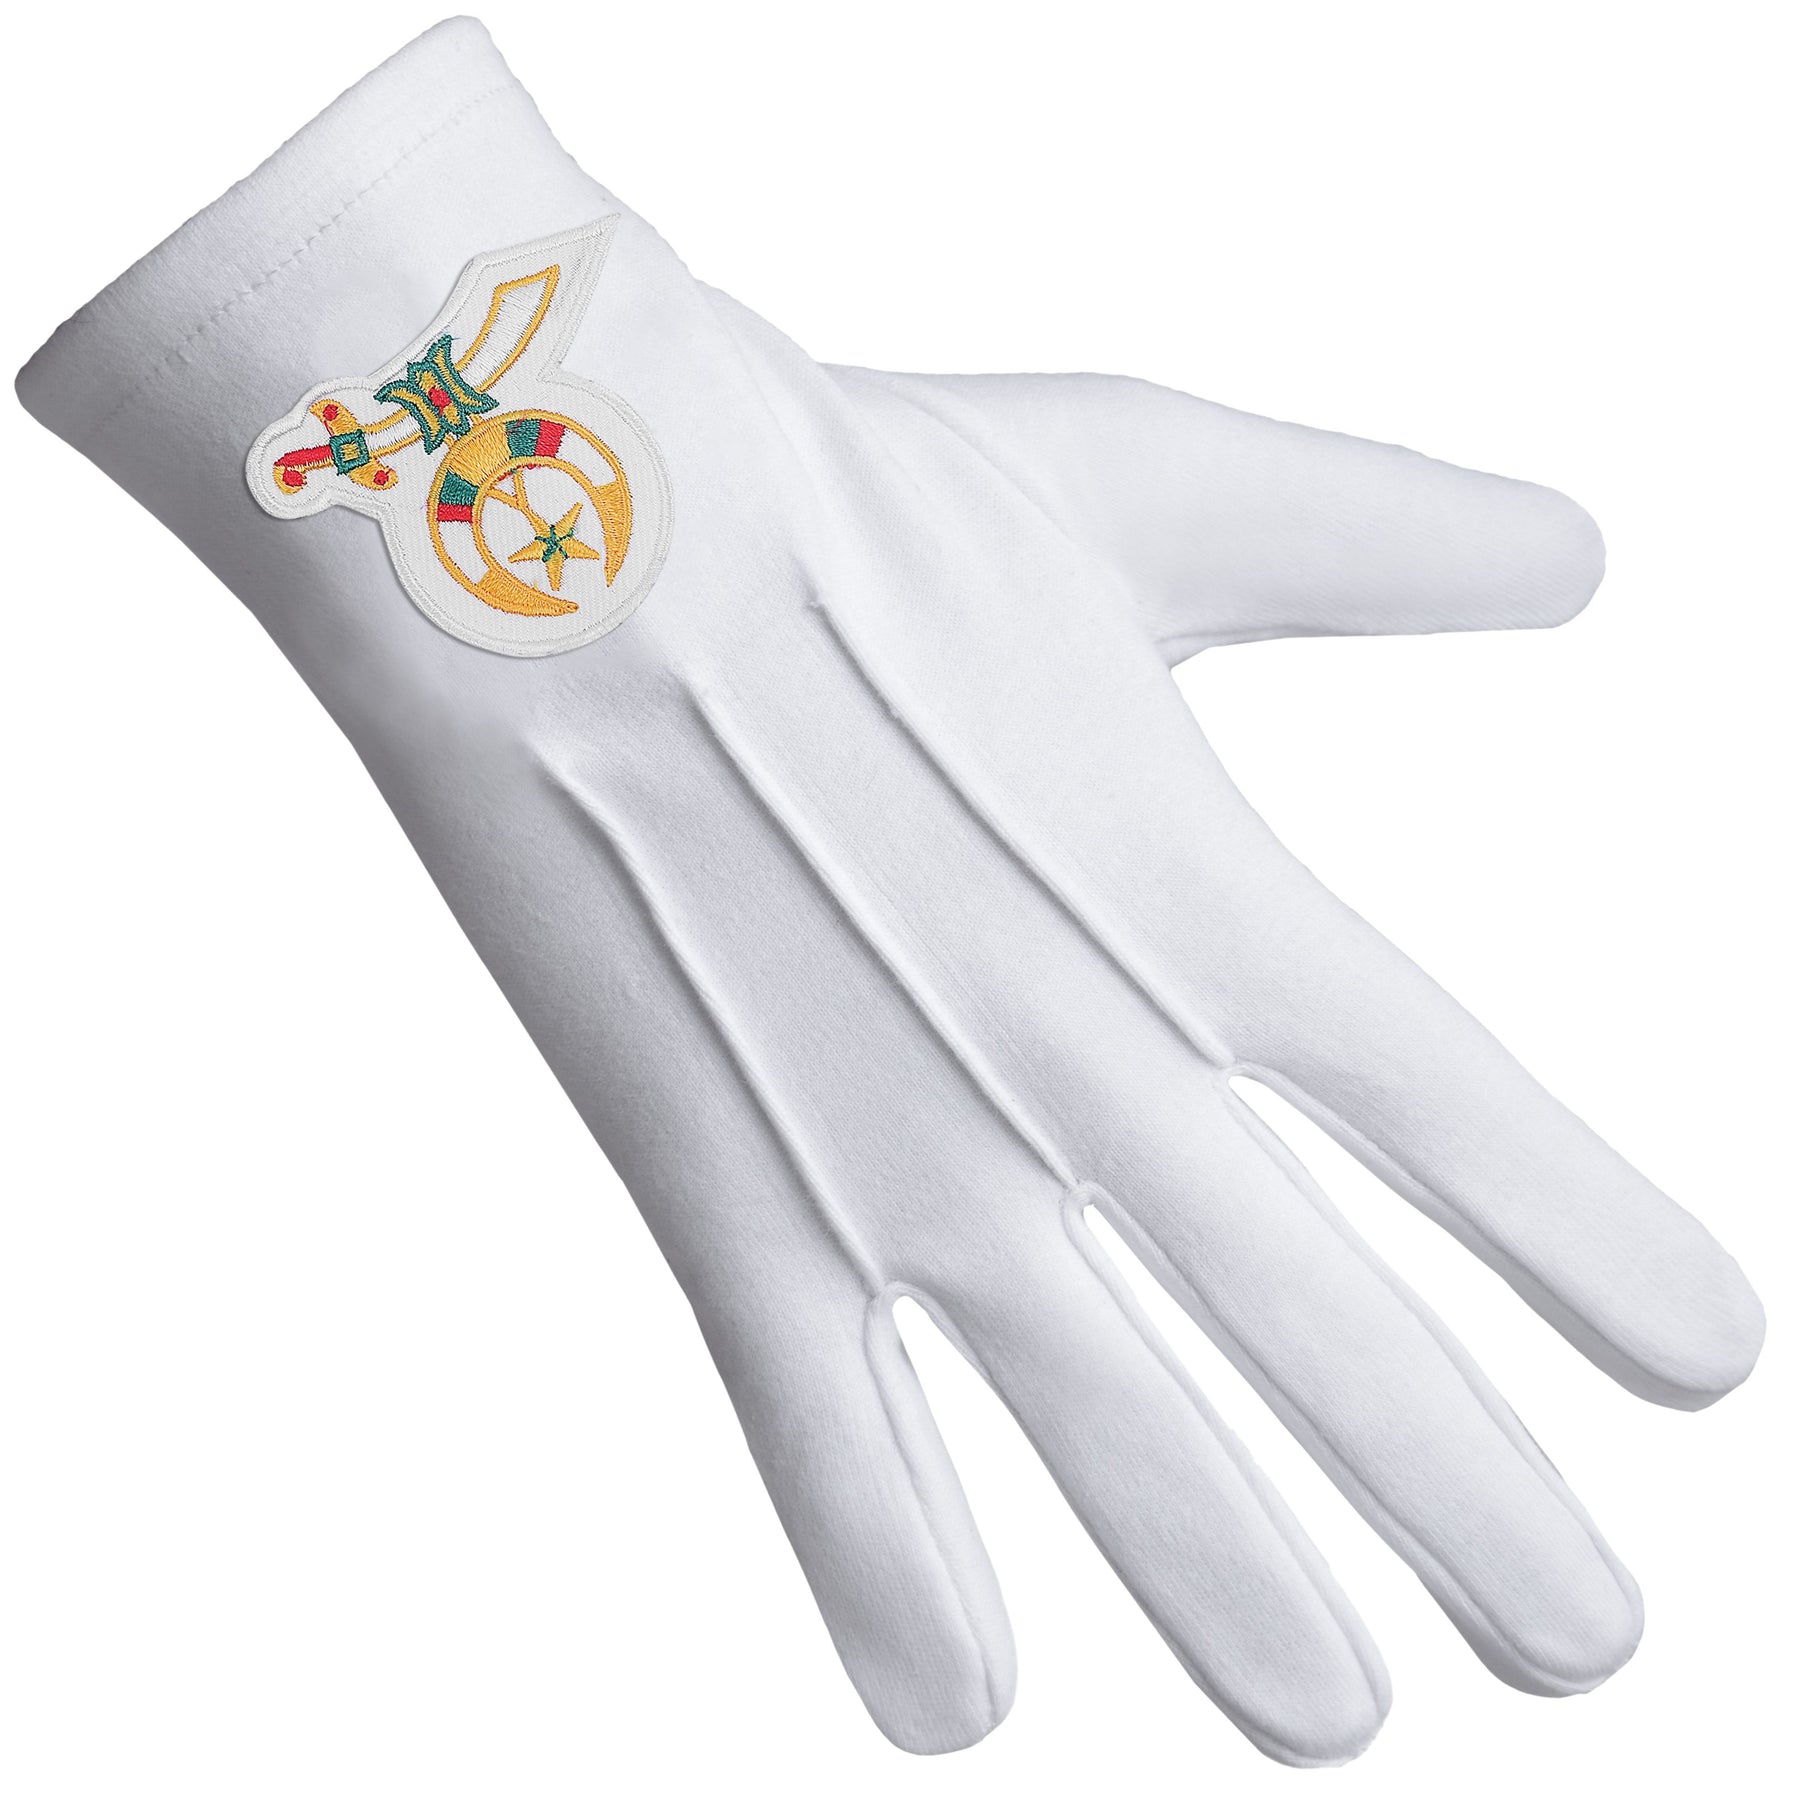 Shriners Glove - White Cotton With Gold Emblem - Bricks Masons